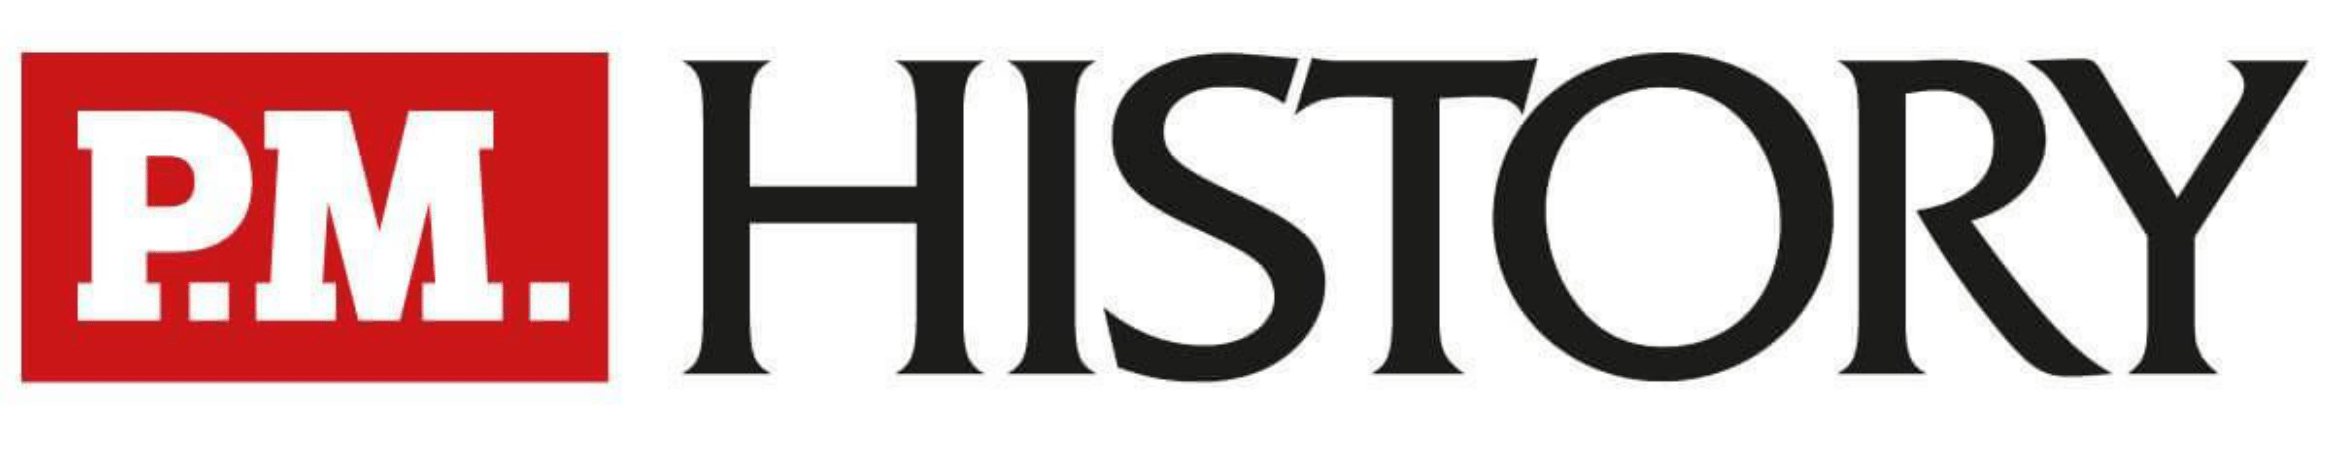 pm-history-logo.png (189 KB)